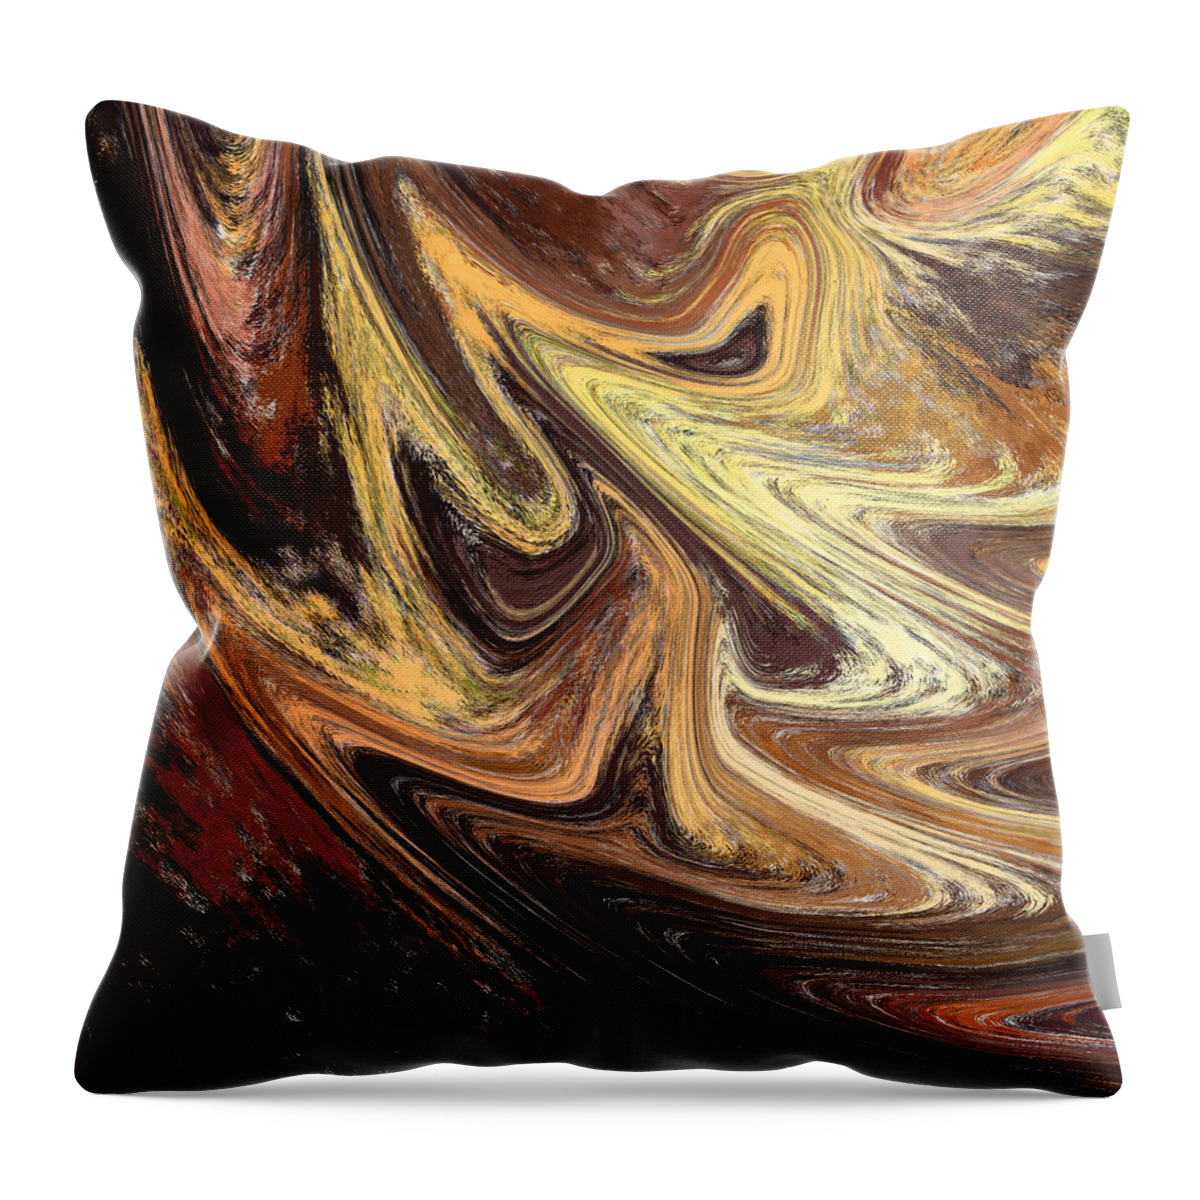 Abstract Throw Pillow featuring the painting Terrestrial Brush Strokes by Irina Sztukowski